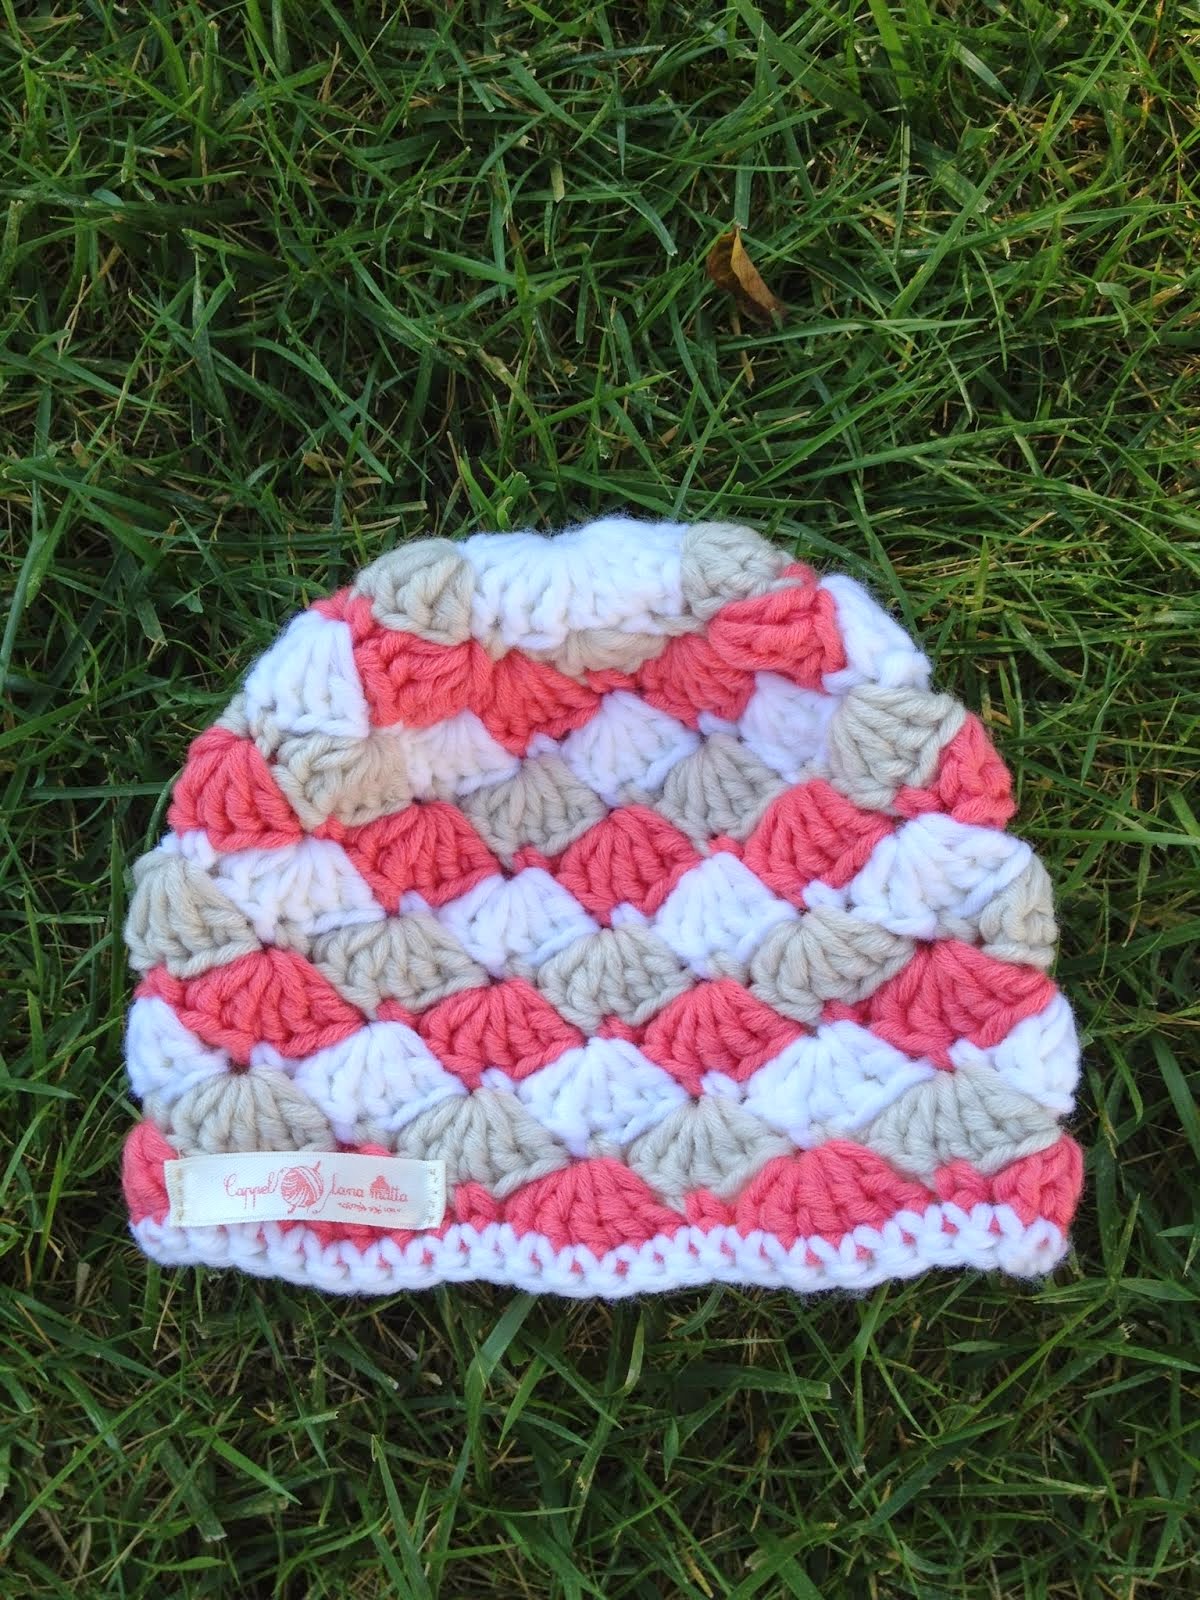 My last crochet hat